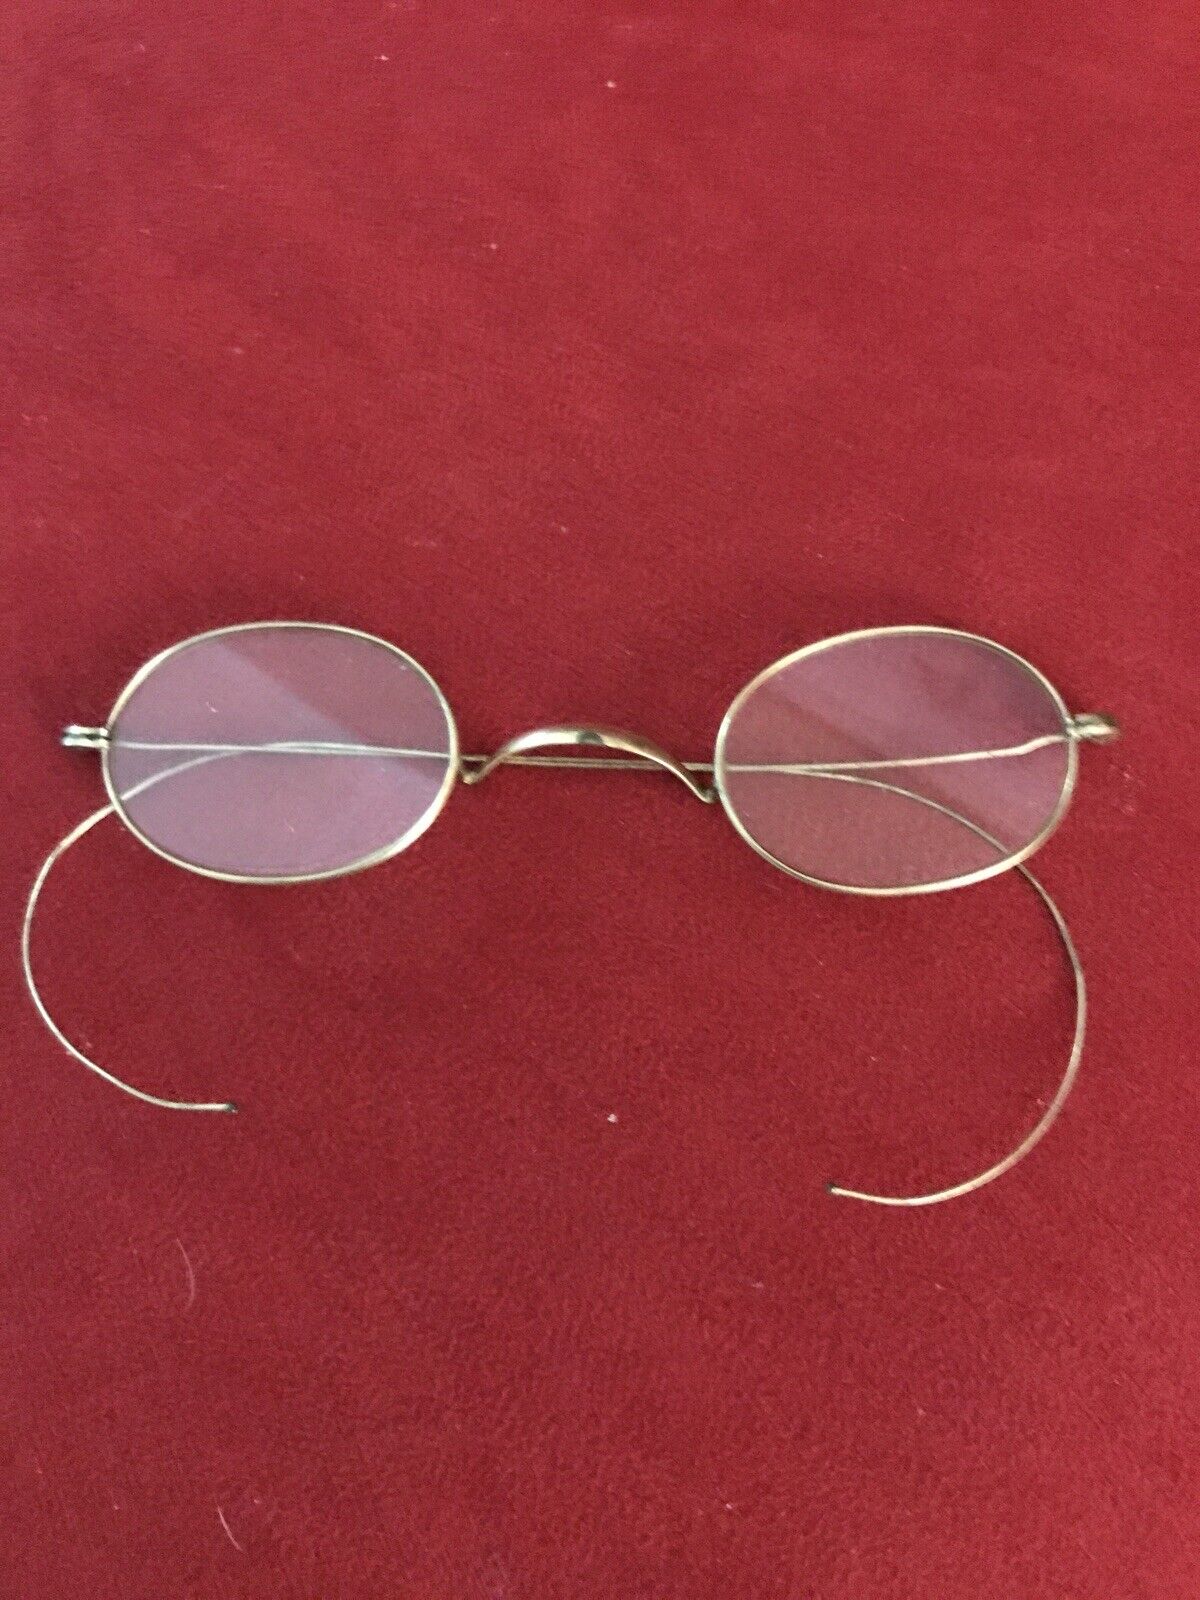 Antique Child’s Reading Glasses